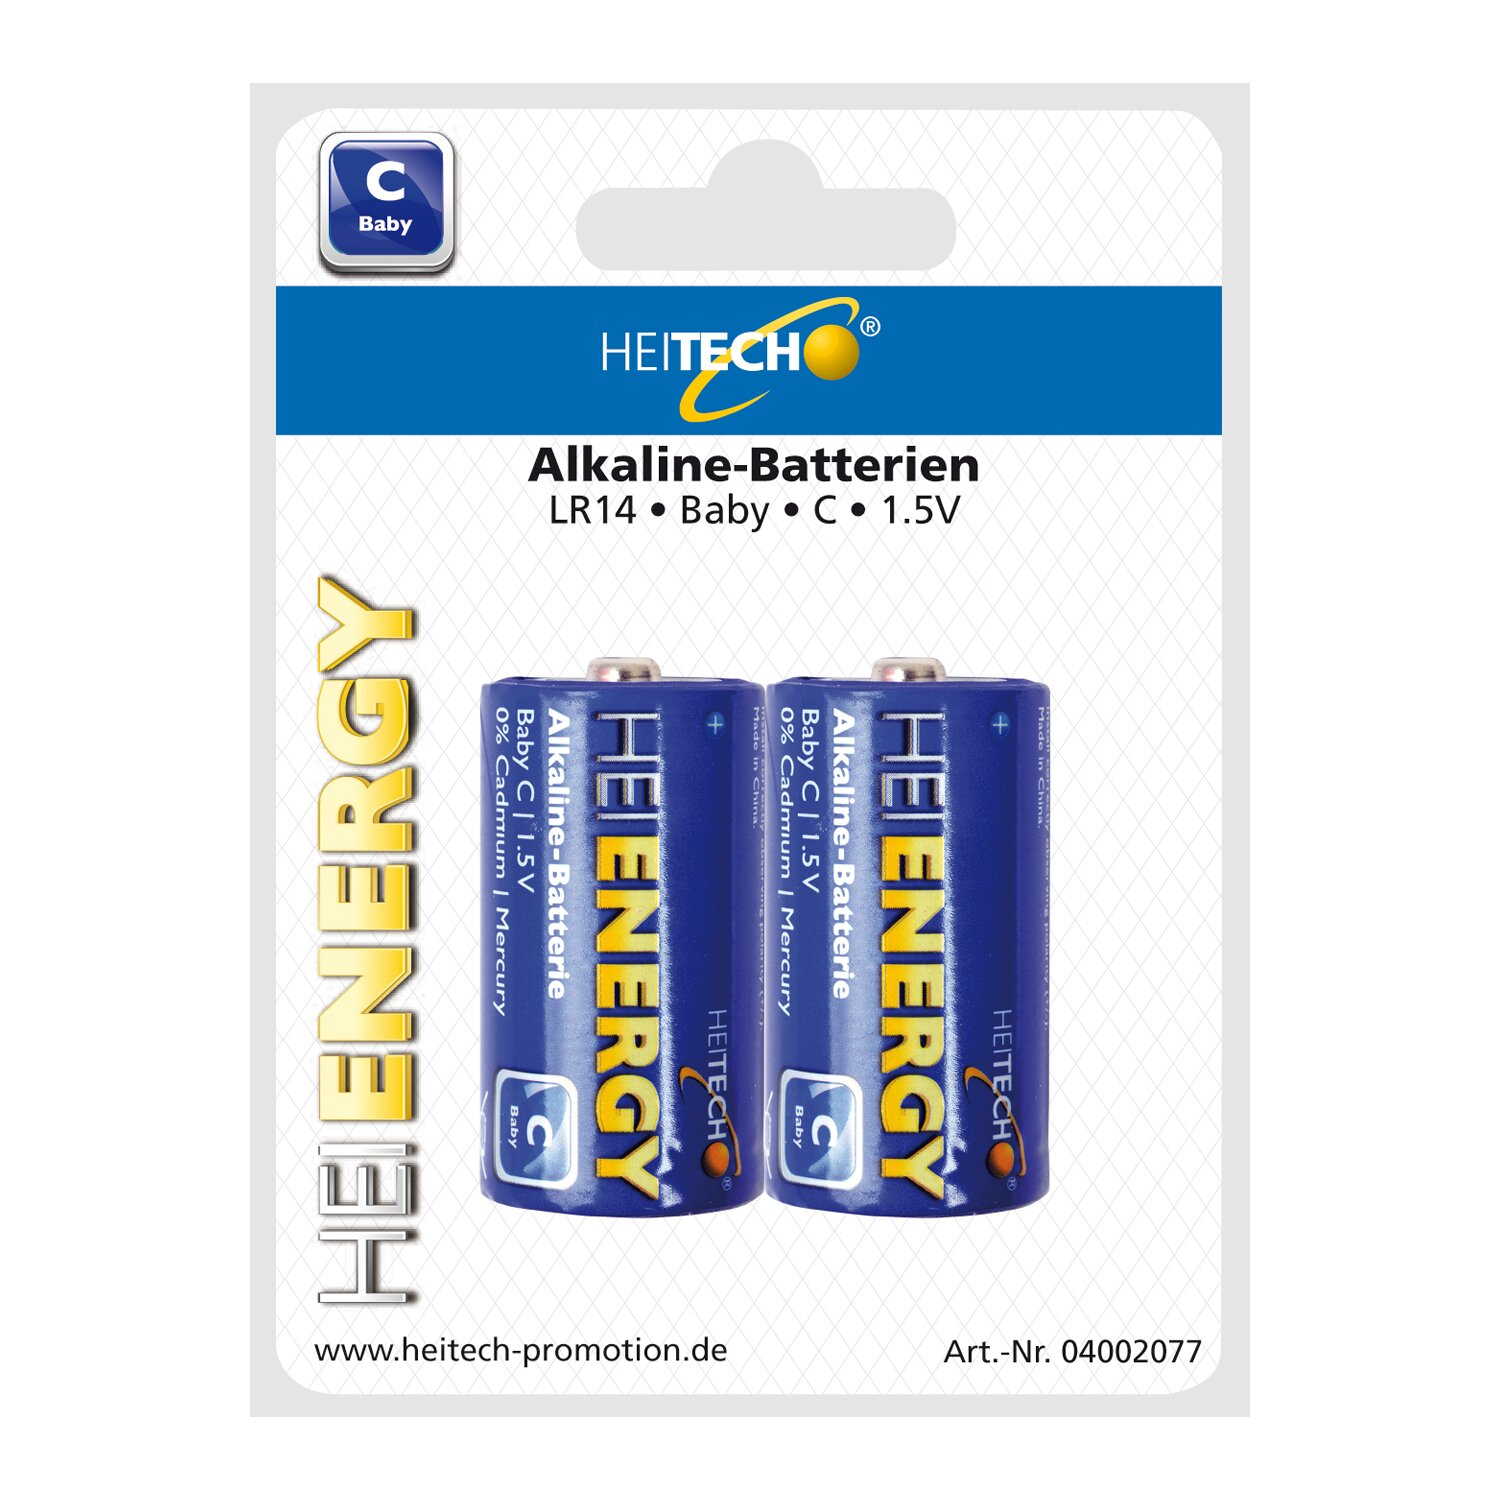 HEITECH 2-er Baby C Pack Alkaline Batterie